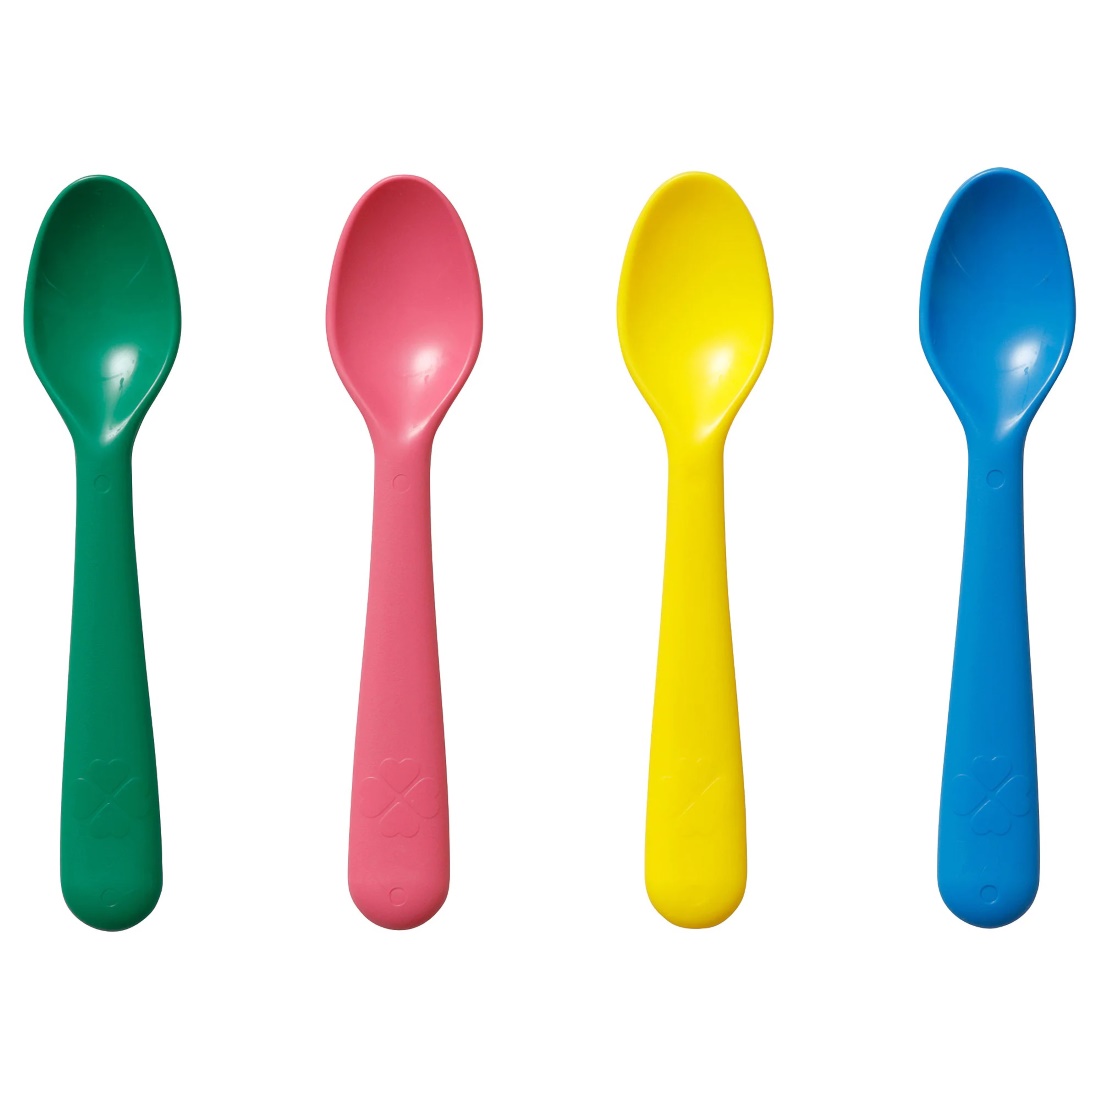 ikea kalas 4-piece spoon set bright colors